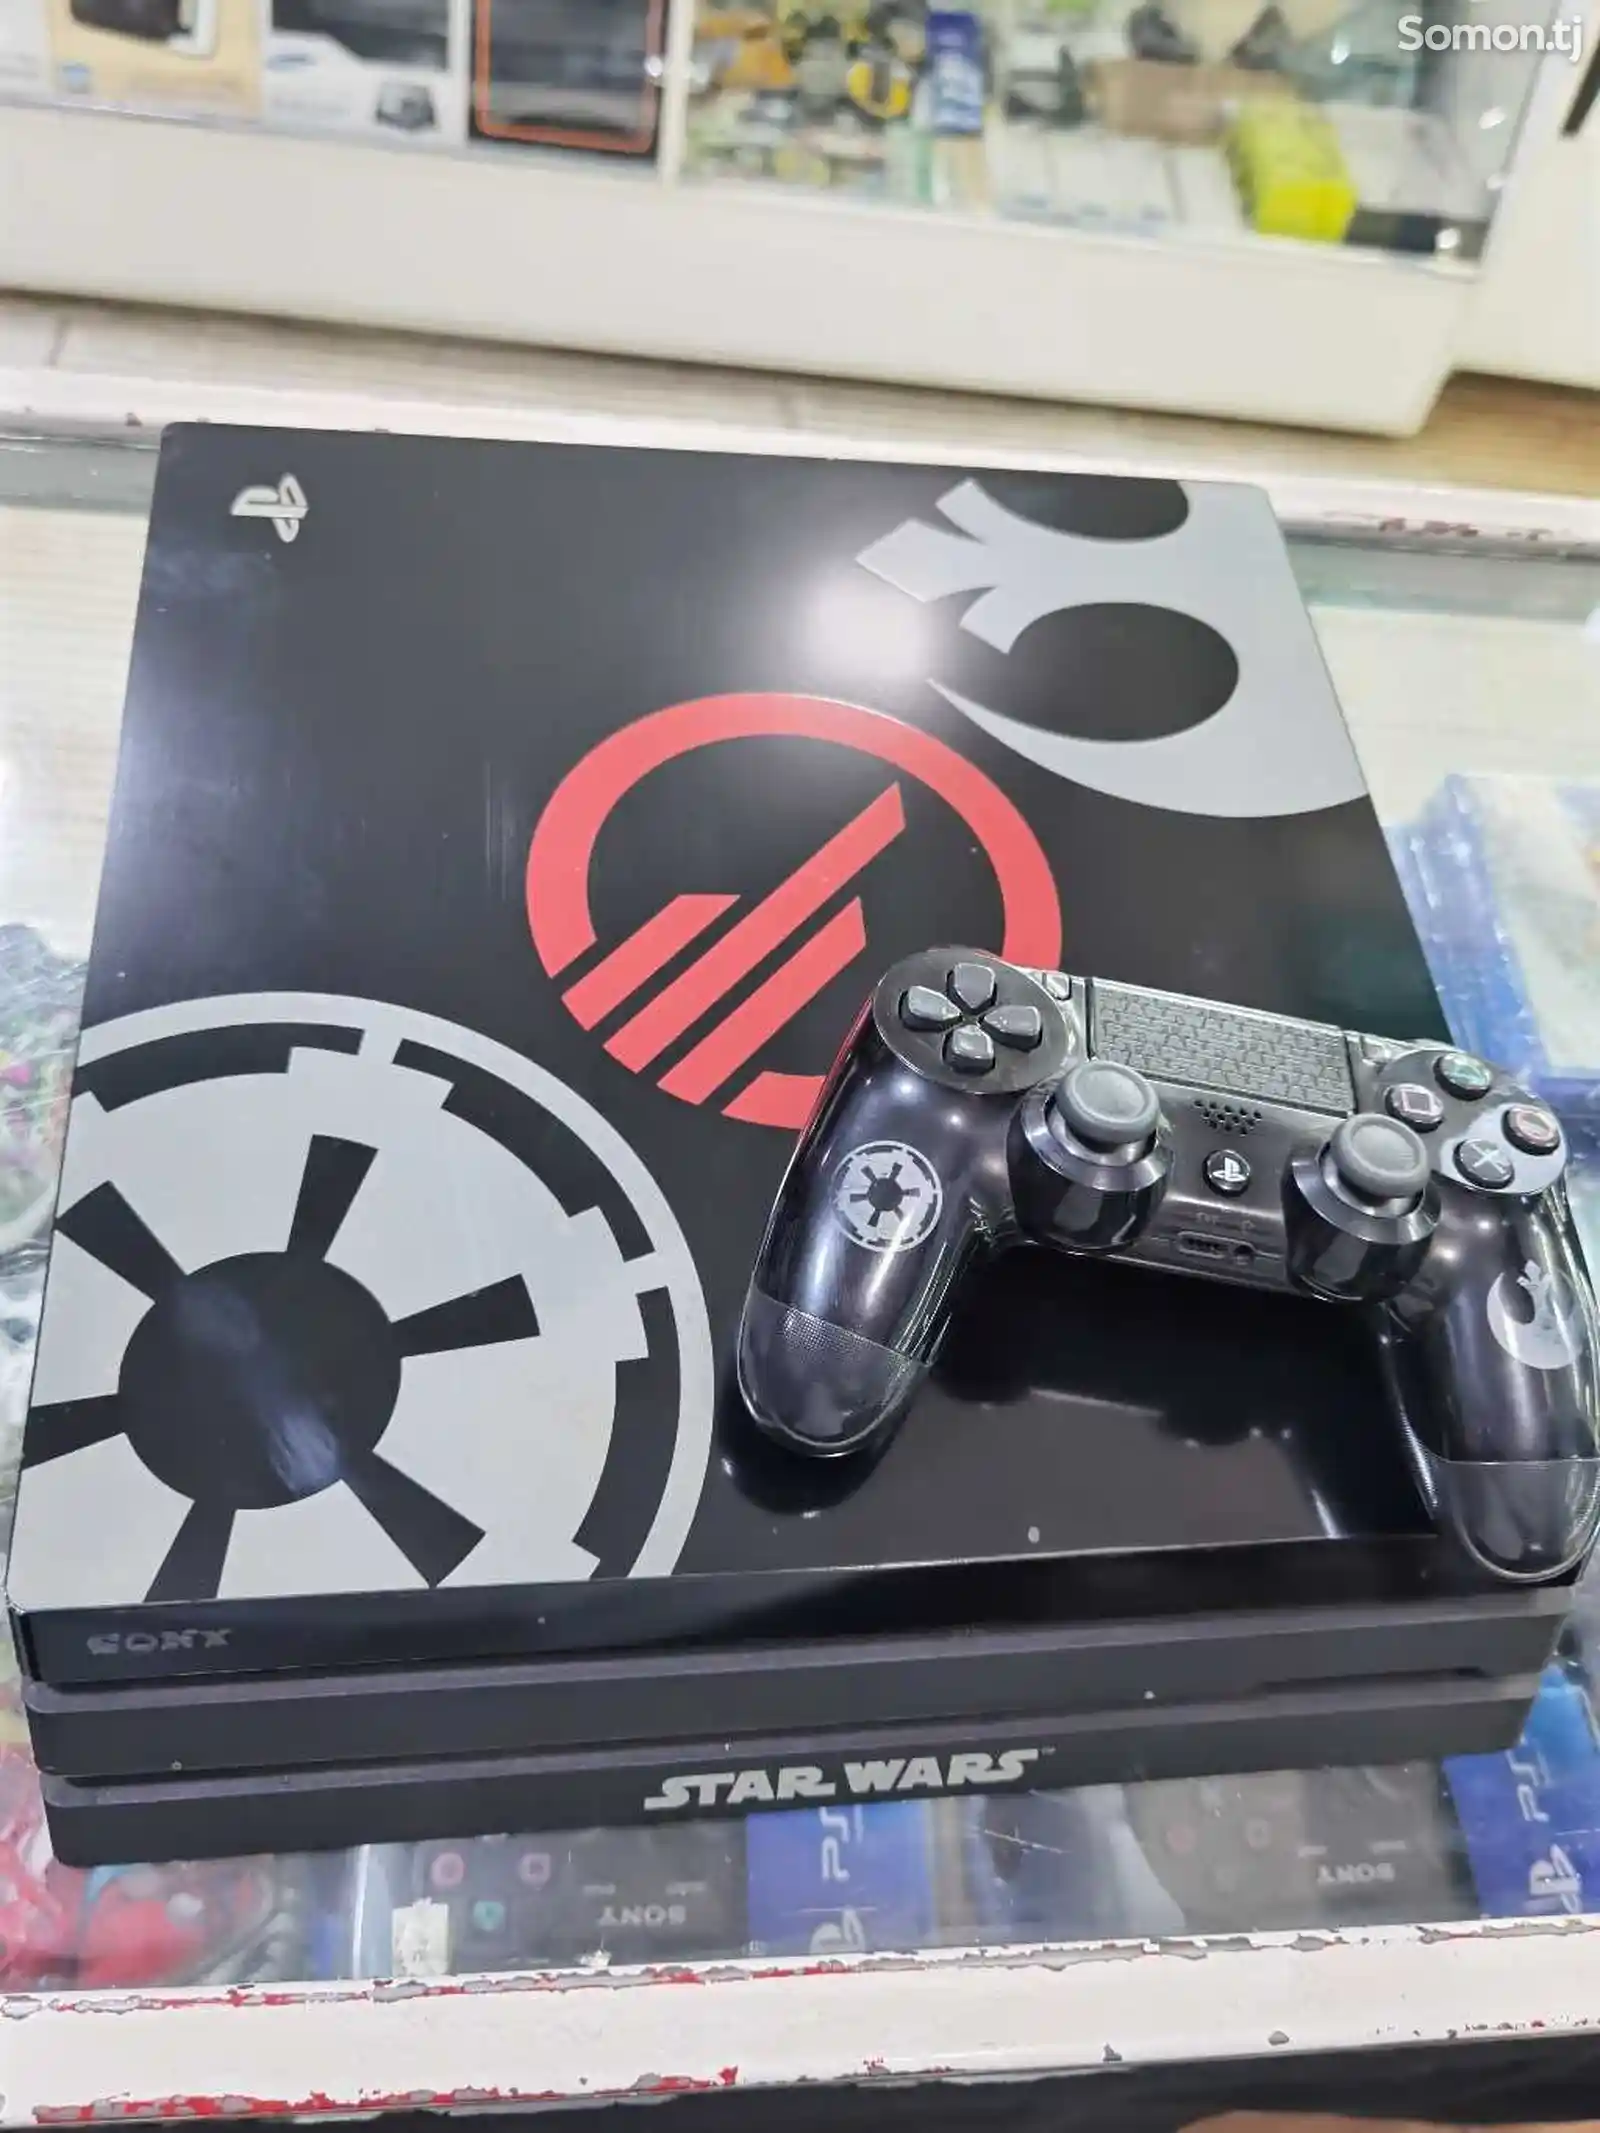 Игровая приставка Sony Playstation 4 pro Star wars 6.72-1